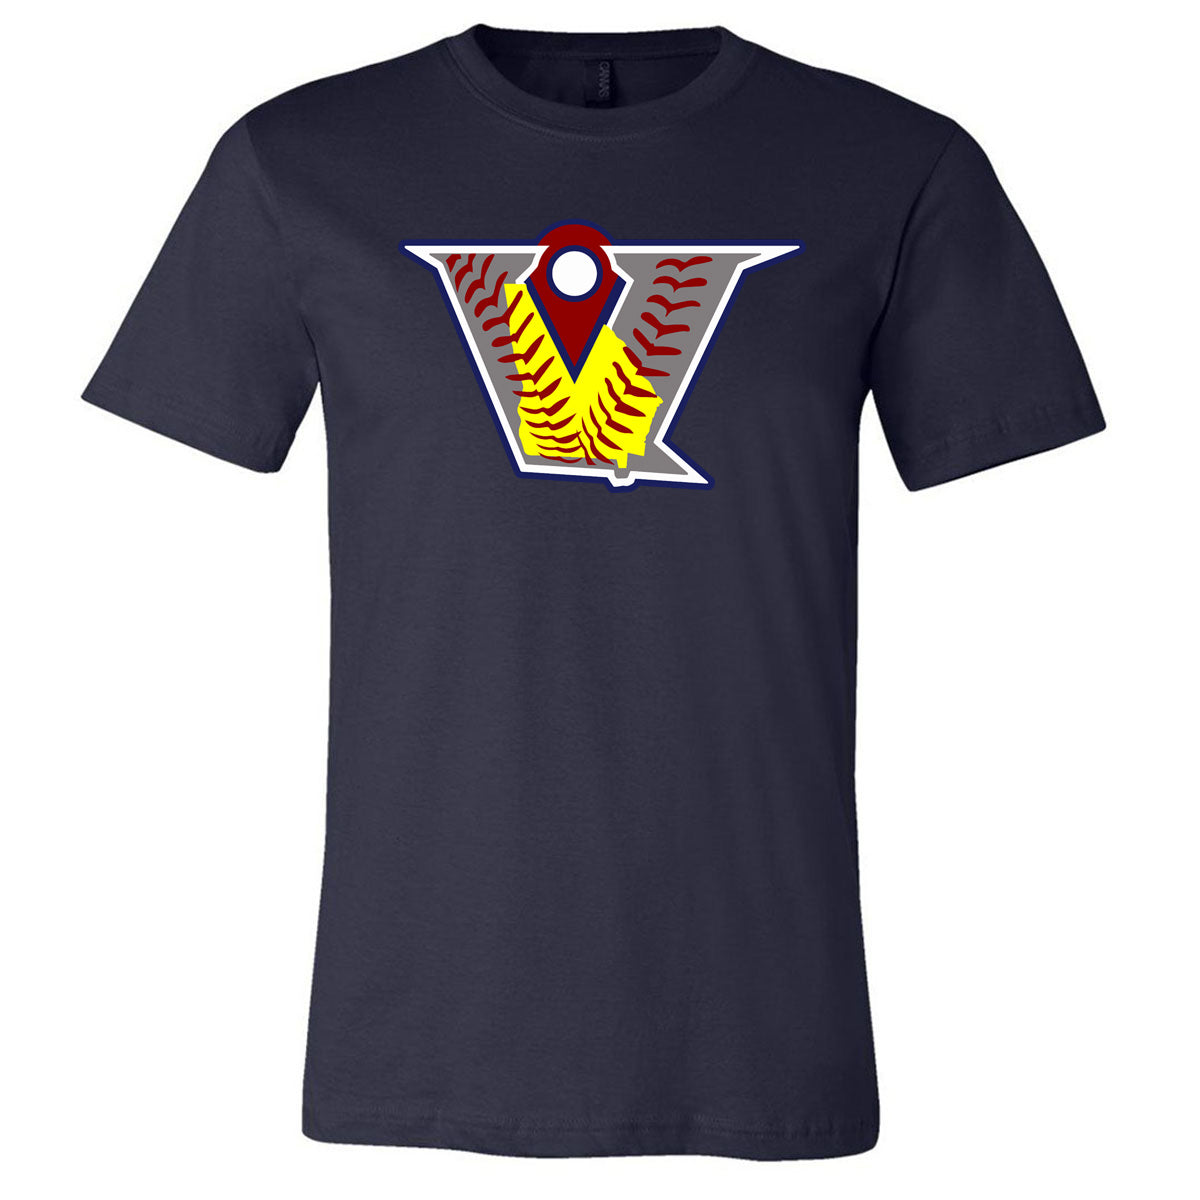 Velo FP - Velocity Fastpitch Logo - Navy (Tee/Hoodie/Sweatshirt) - Southern Grace Creations